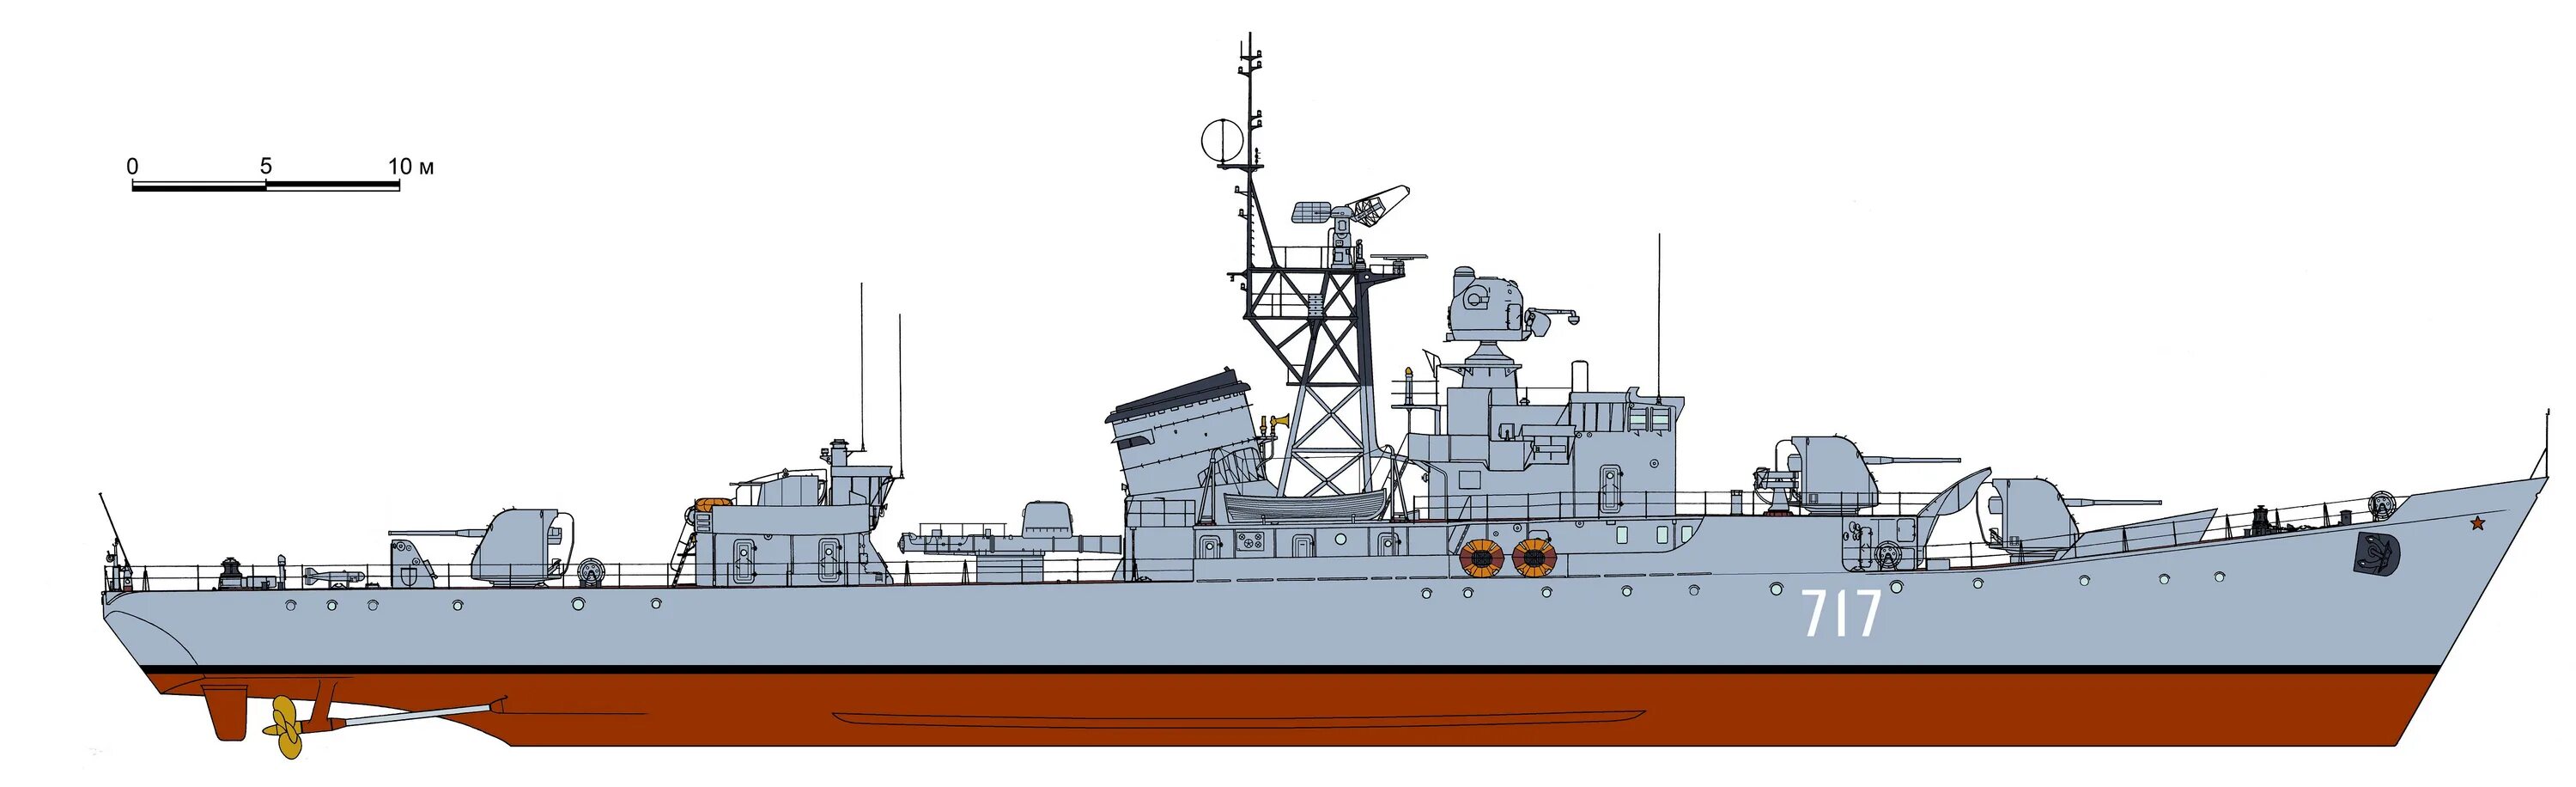 Проект 50 12. СКР проекта 42. Сторожевые корабли проекта 42 типа «Сокол». Сторожевые корабли проекта 50. Модель СКР пр 50.